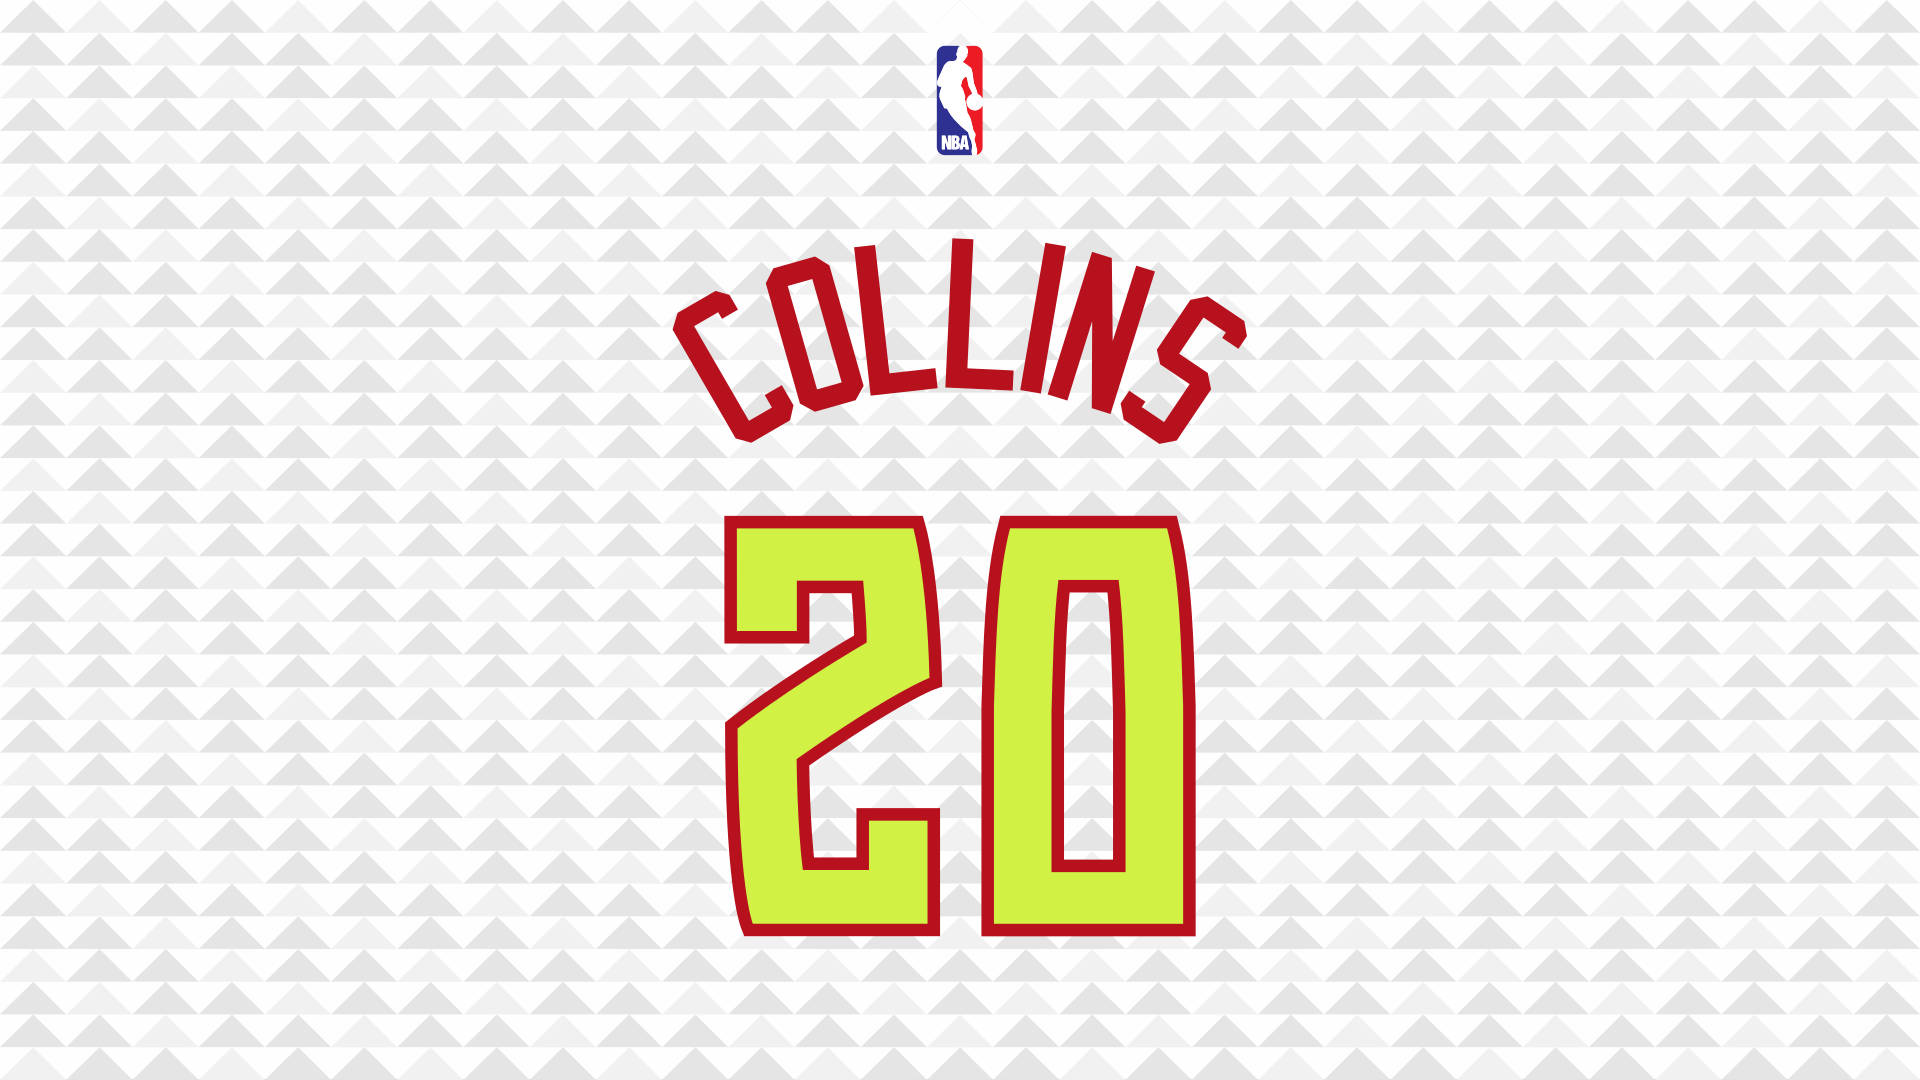 John Collins Player Number Poster Background